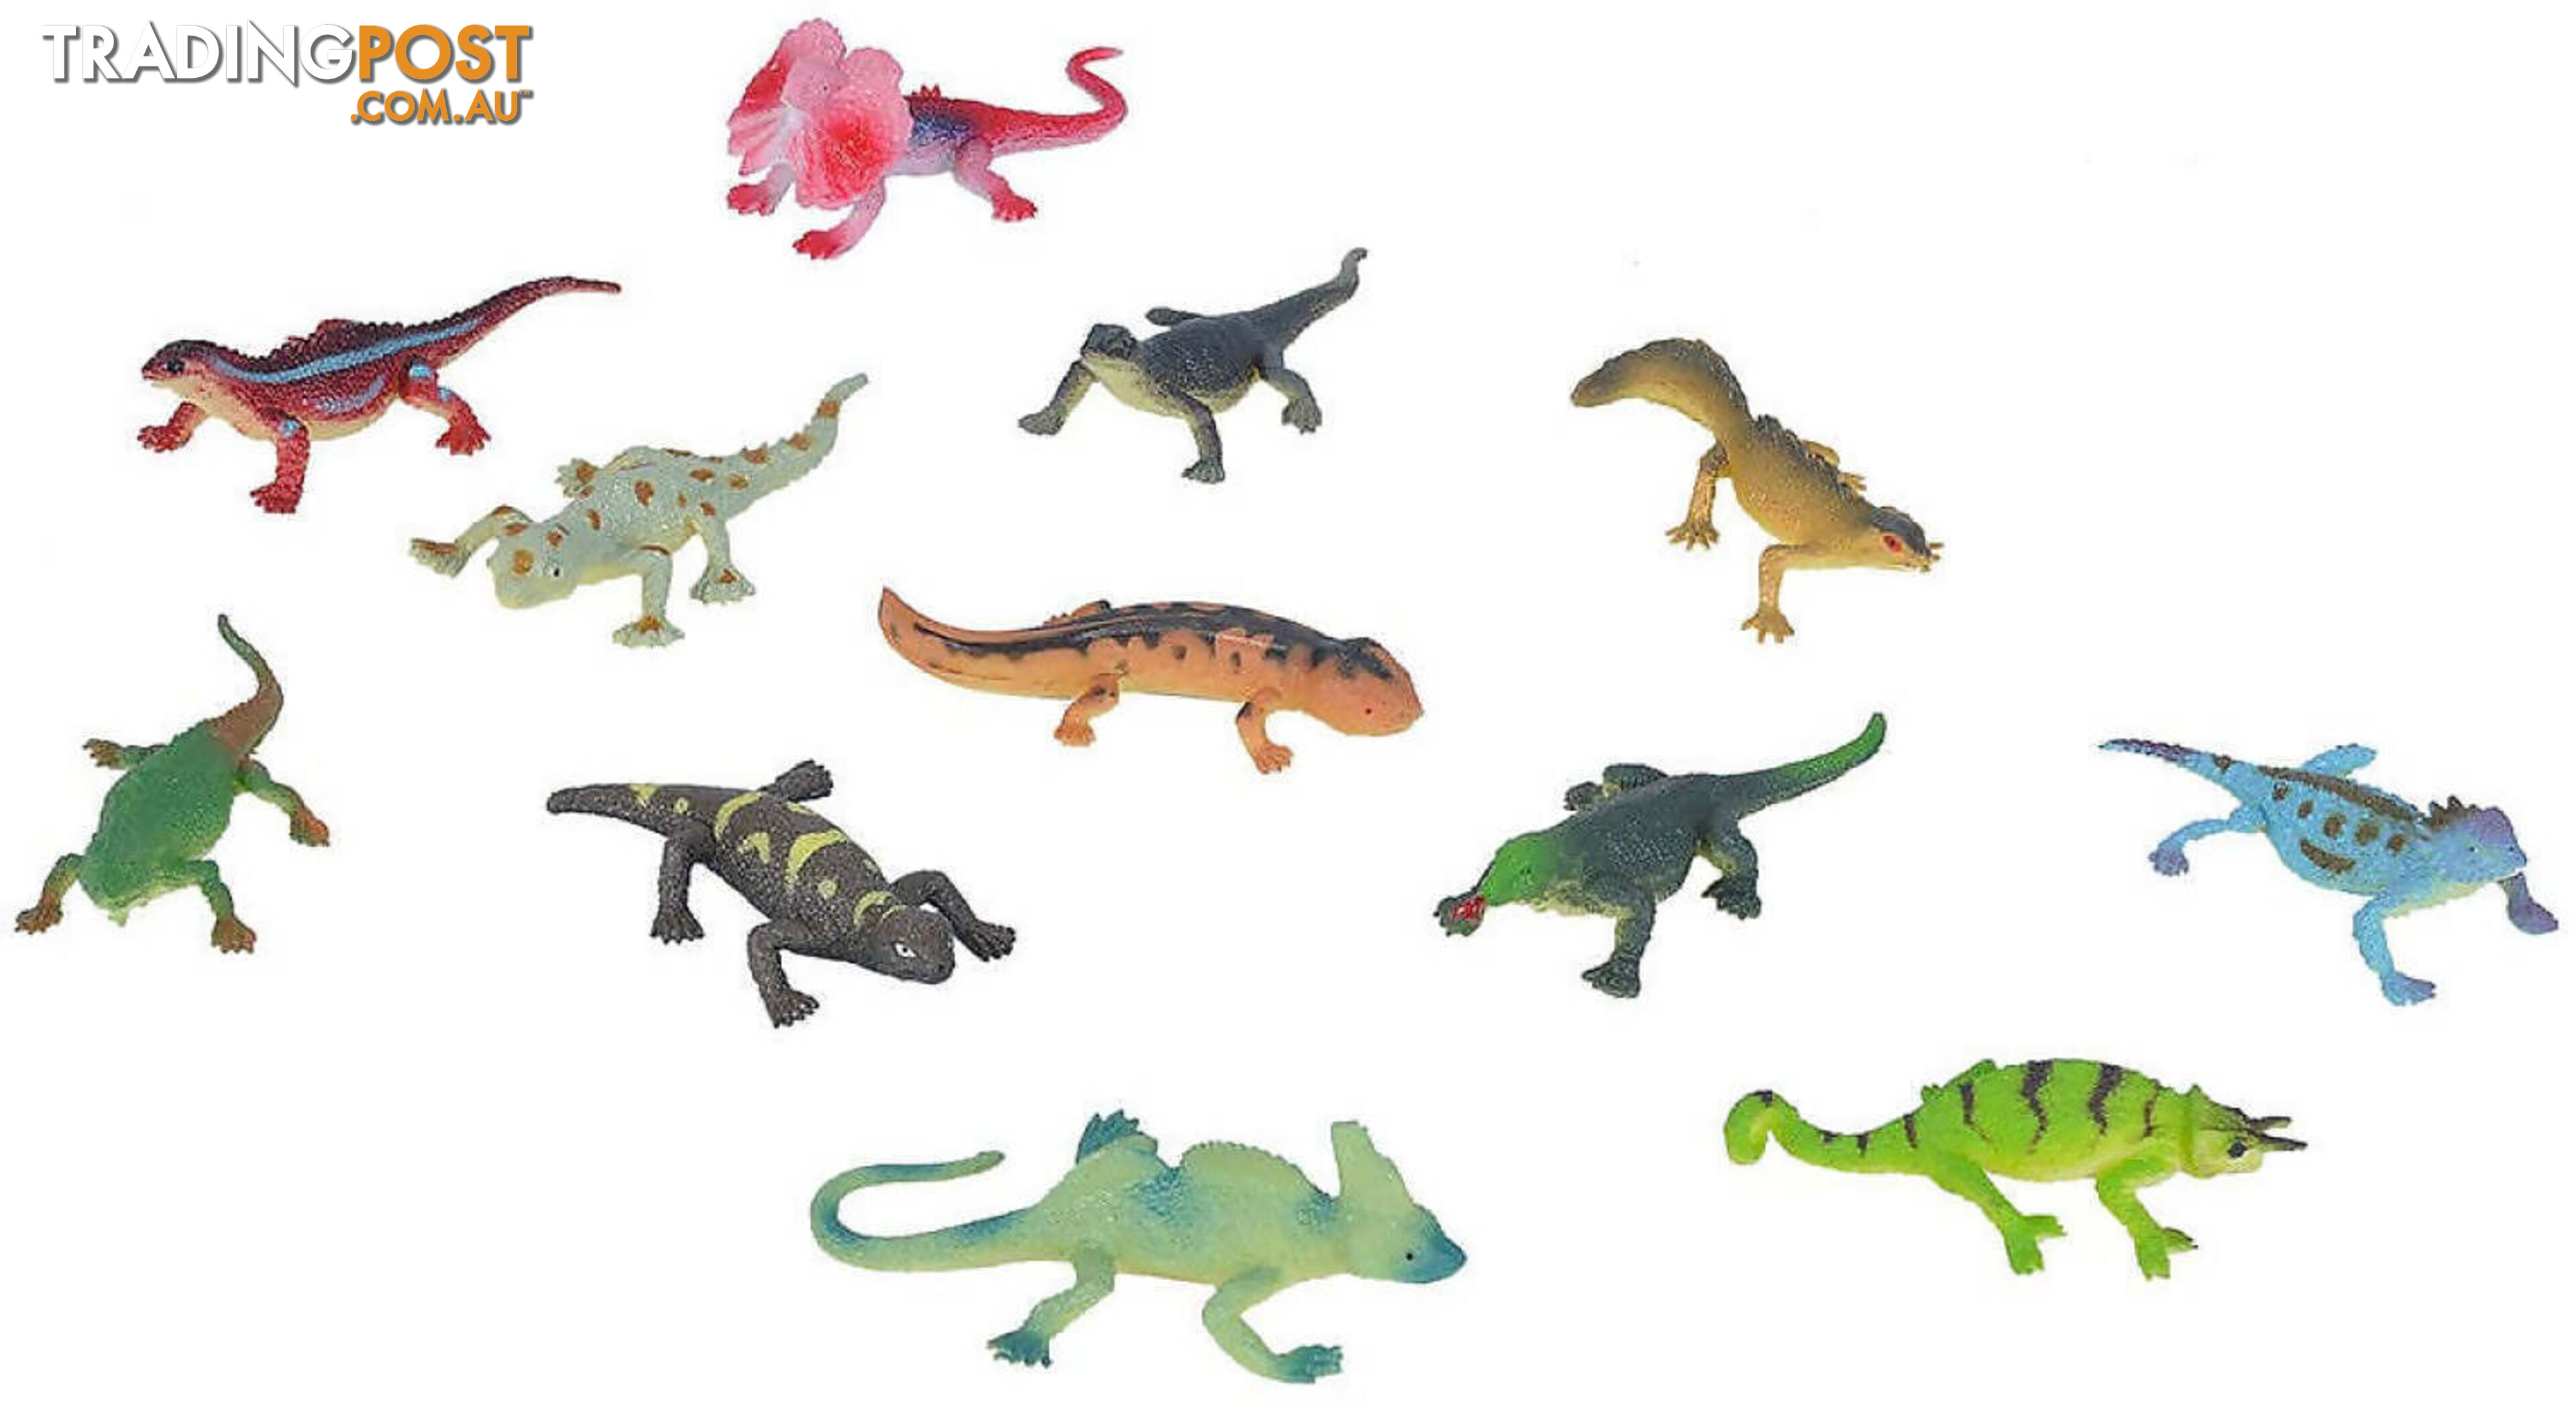 Wild Republic - Polybag Mini Lizard Collection - Wr22125 - 092389221251